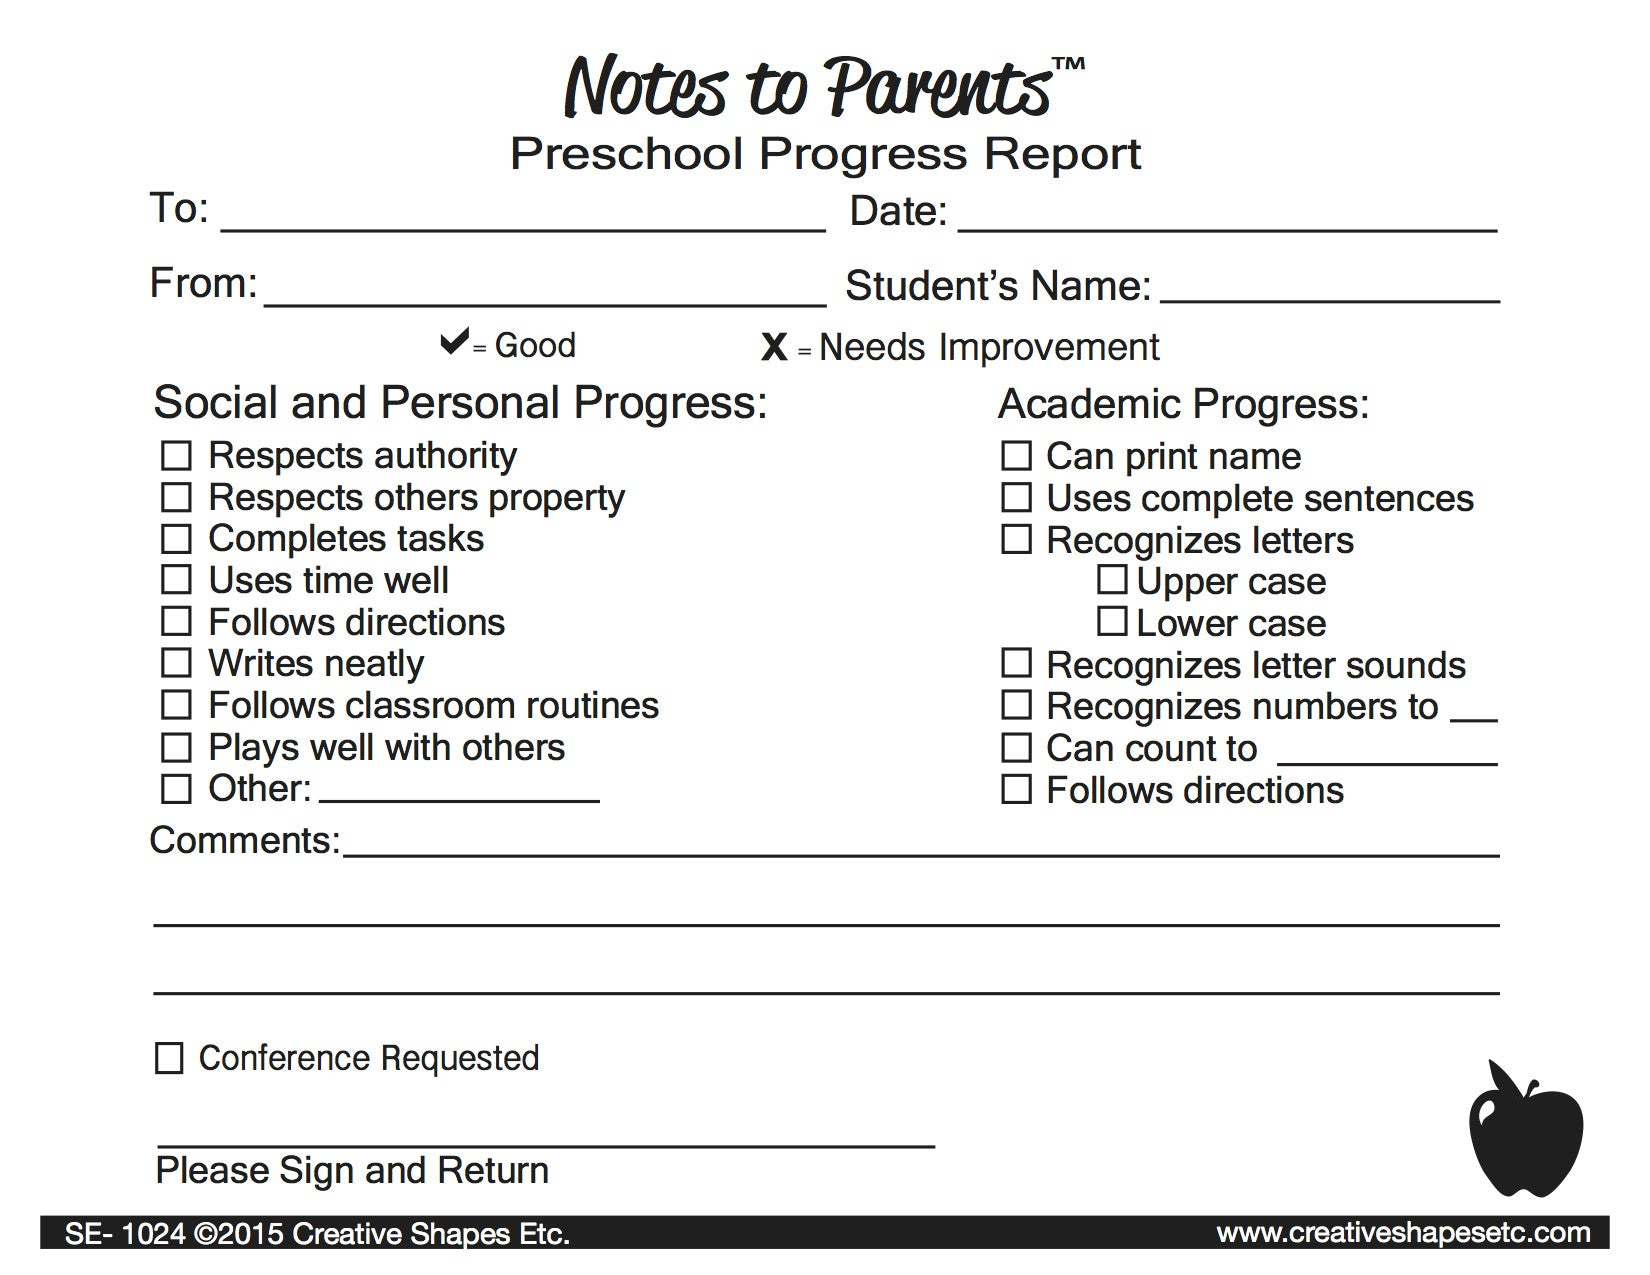 Preschool Progress Report - Notes to Parents Regarding Preschool Progress Report Template